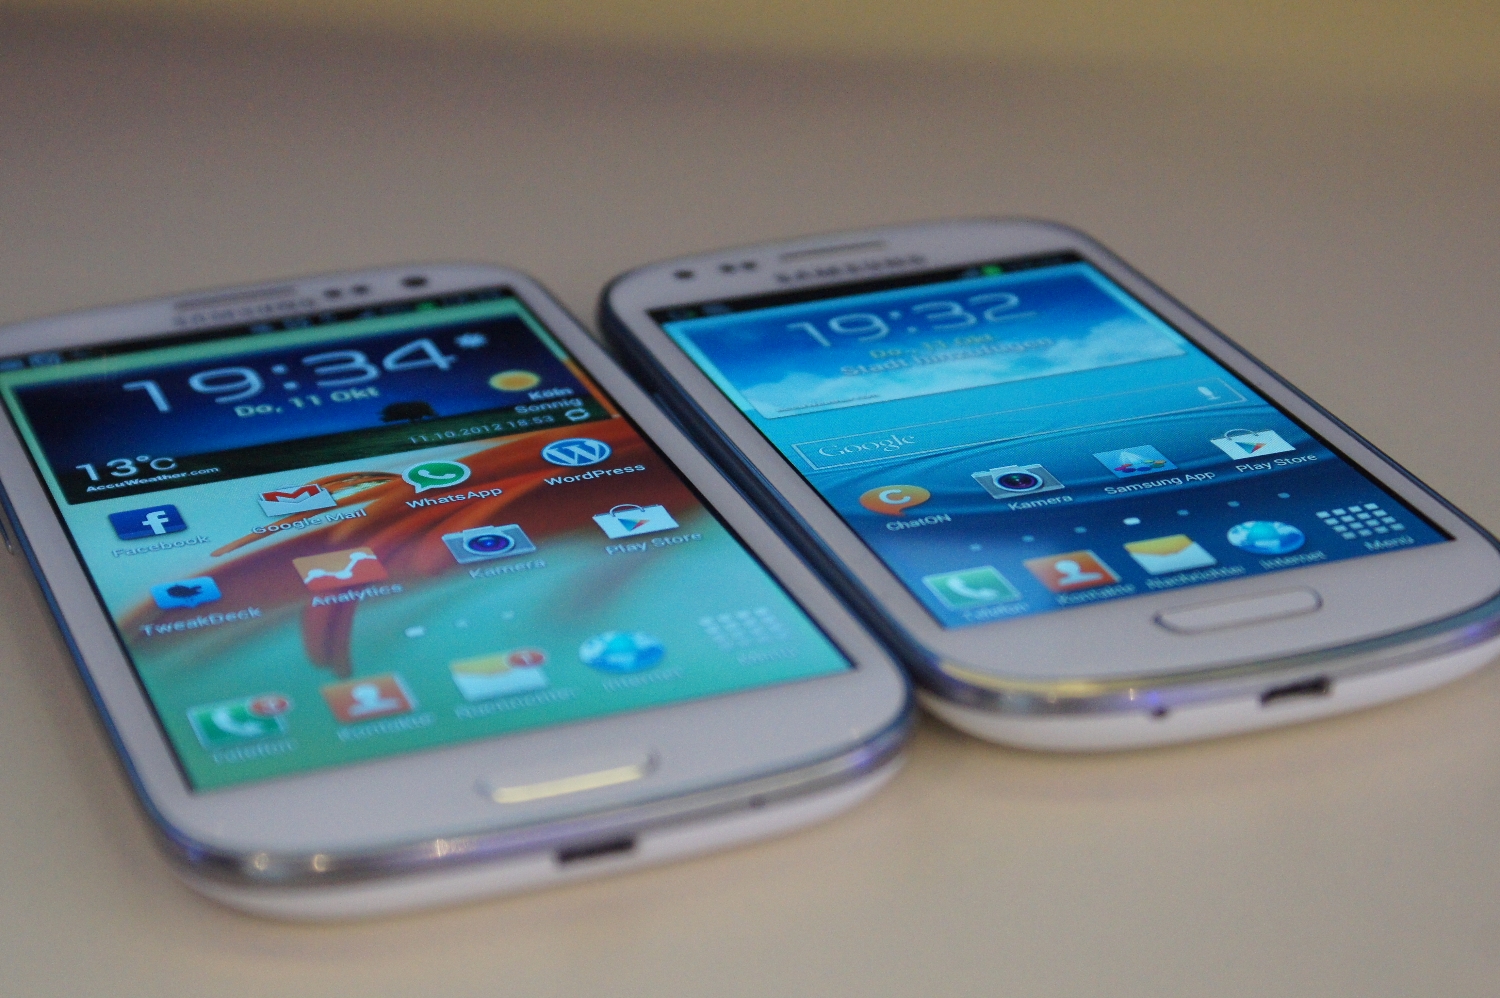 Galaxy 3 8.0. Samsung Galaxy s3. Самсунг галакси s3 Mini. Samsung Galaxy s III Mini. Самсунг с3 мини ve.